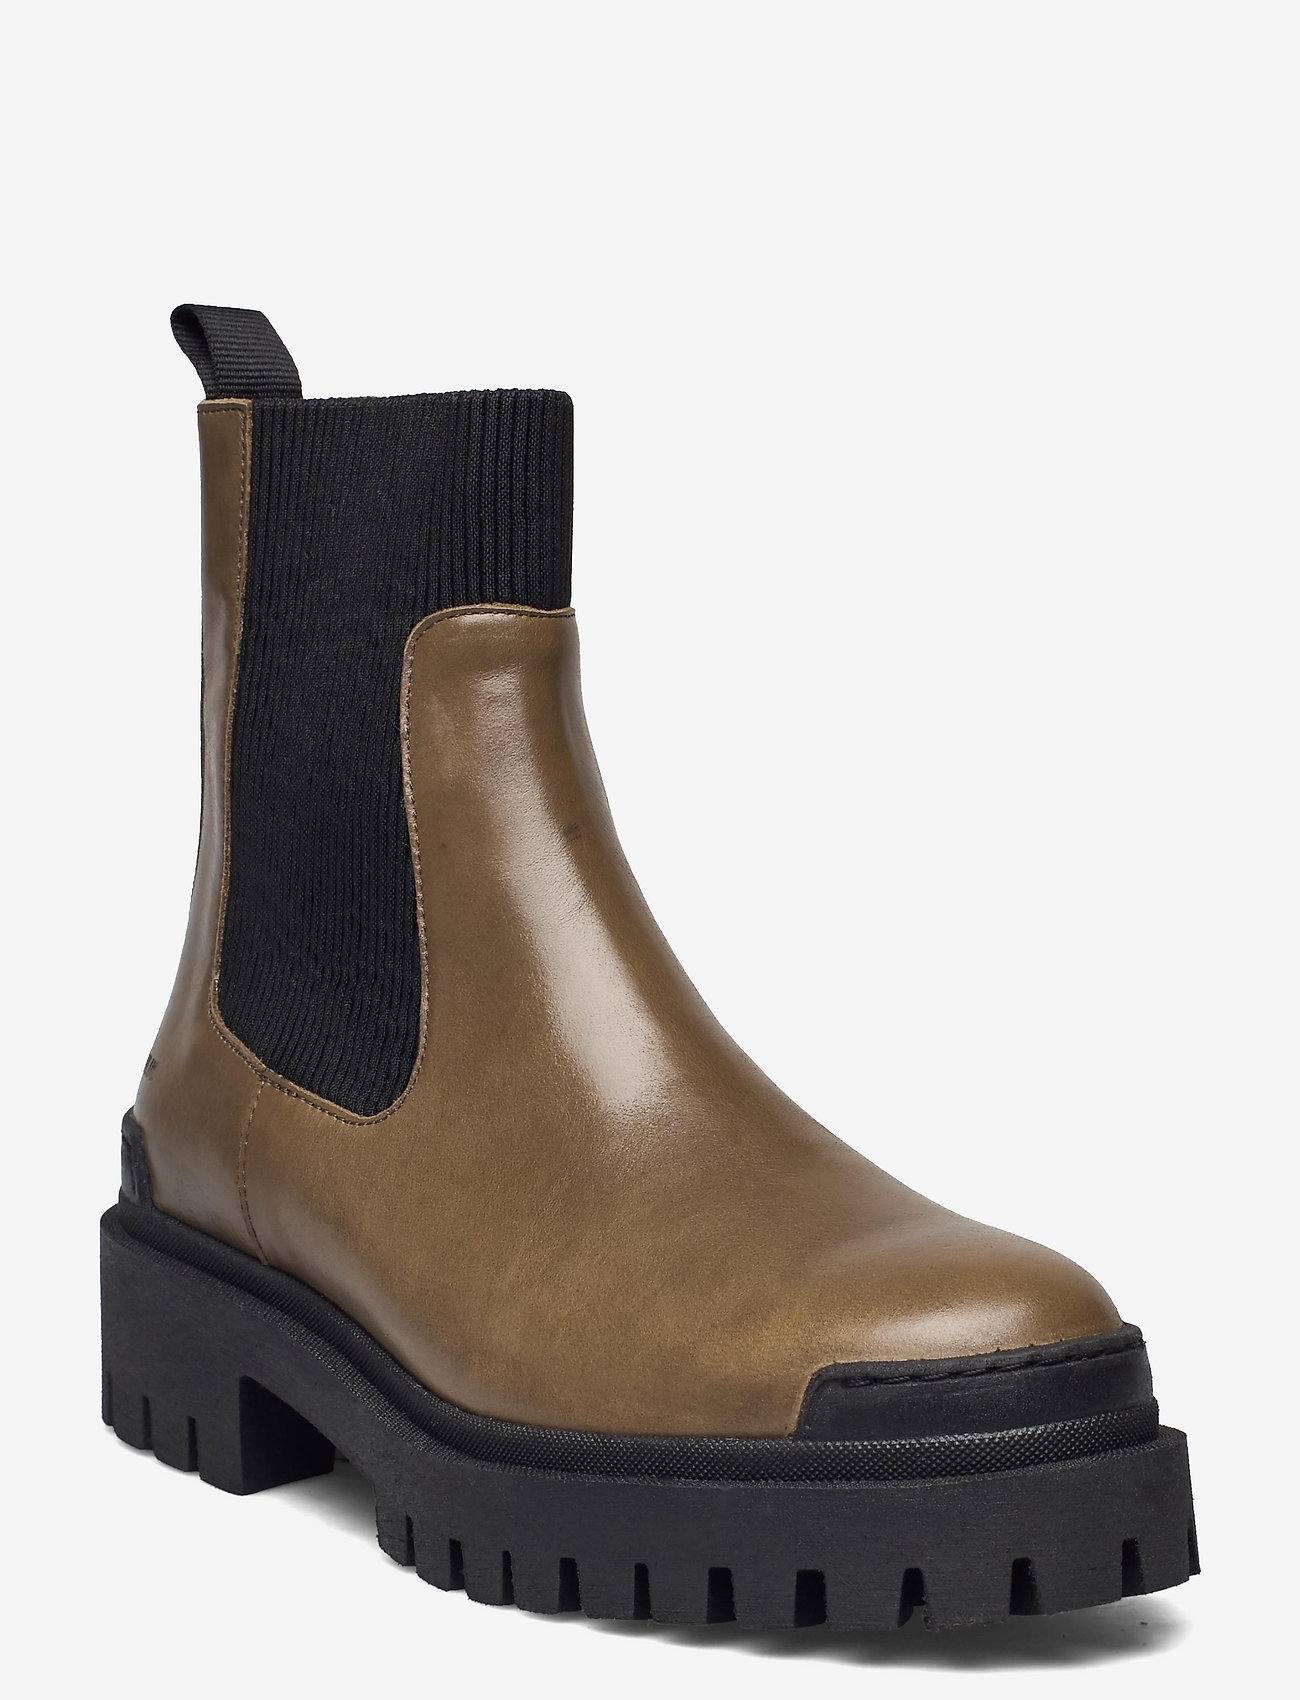 ANGULUS - Boots - flat - chelsea stila zābaki - 1841/019 dark olive/black - 0